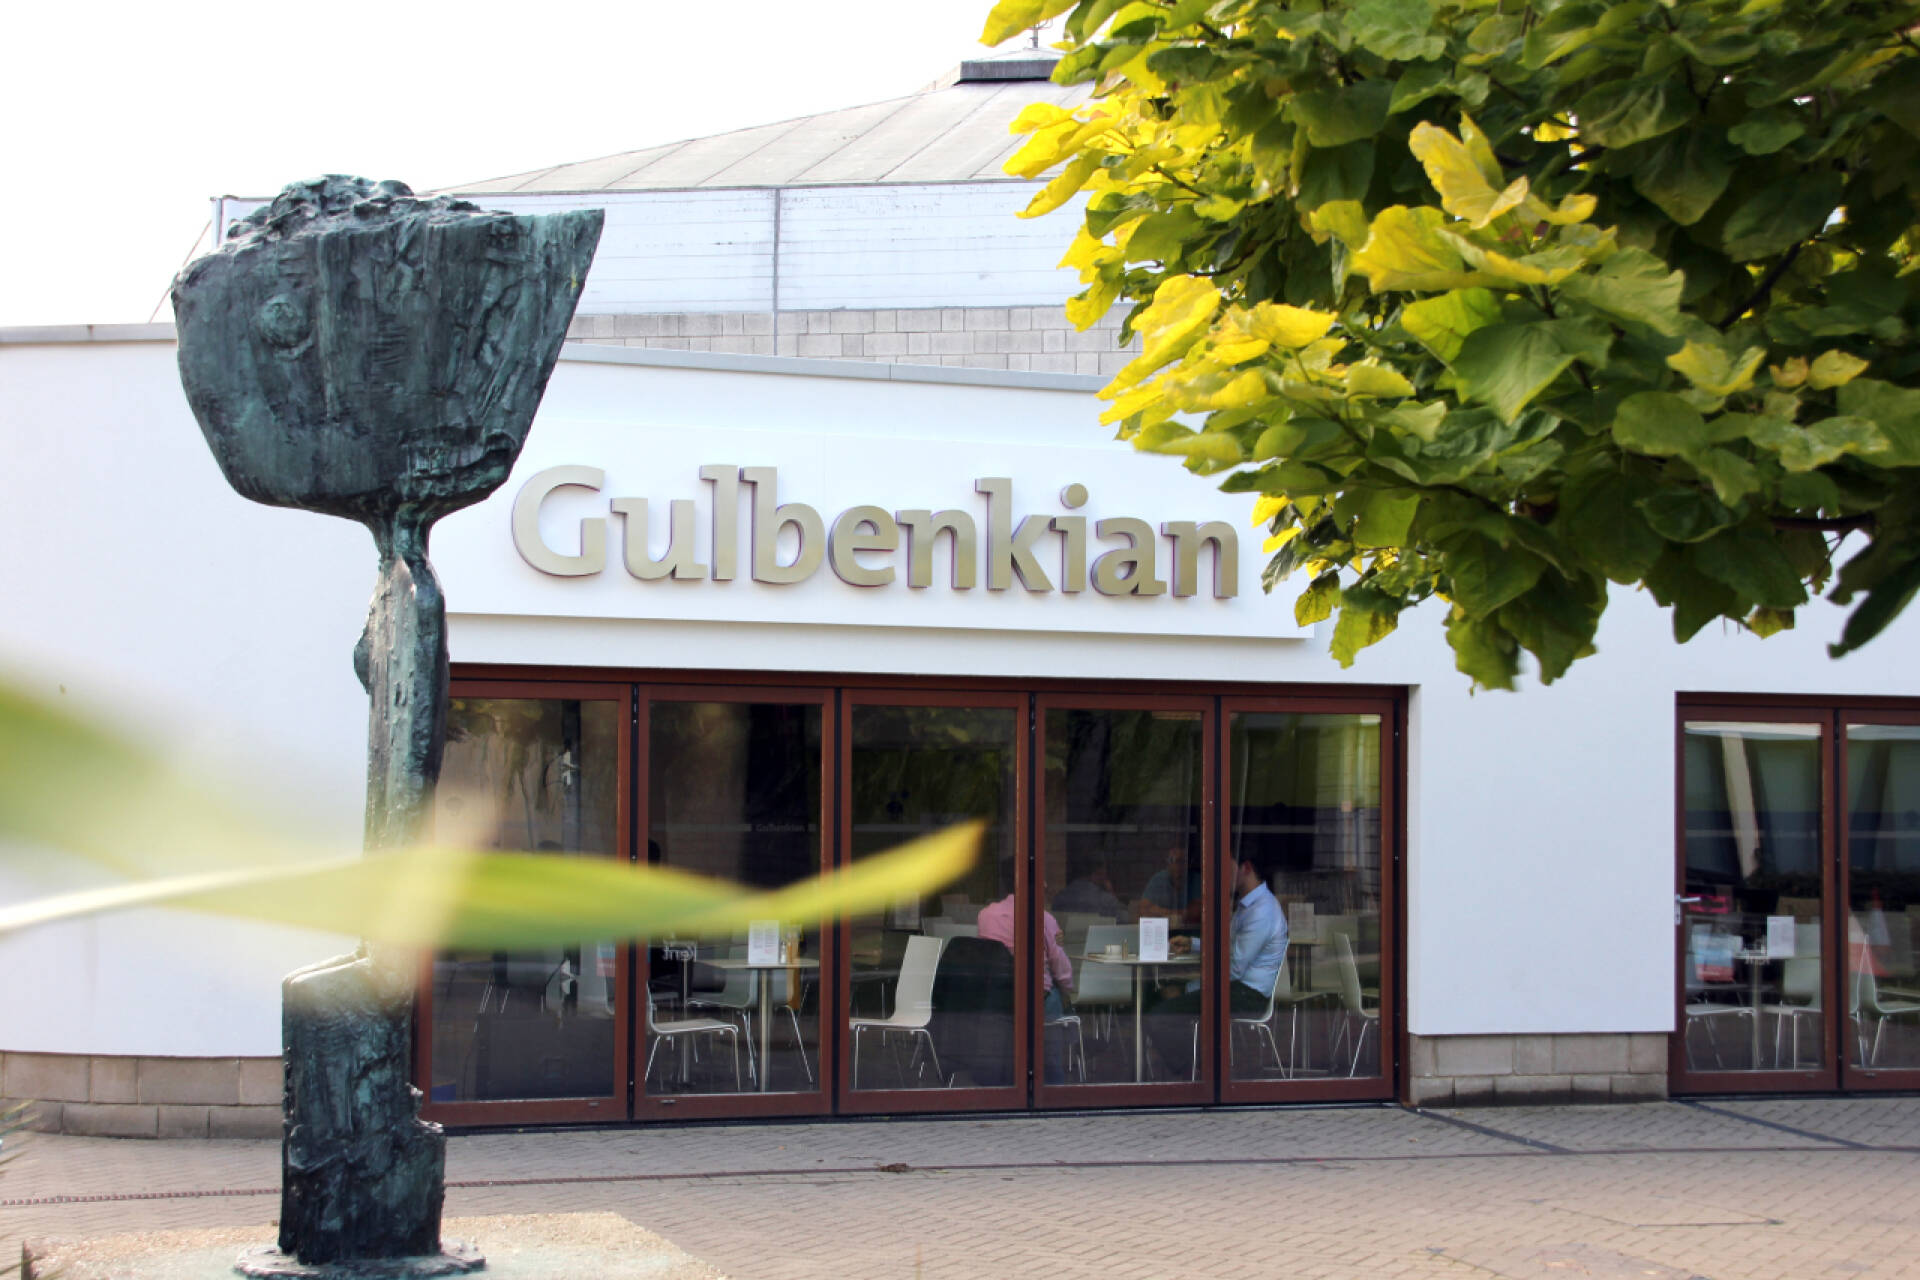 The exterior of the Gulbenkian